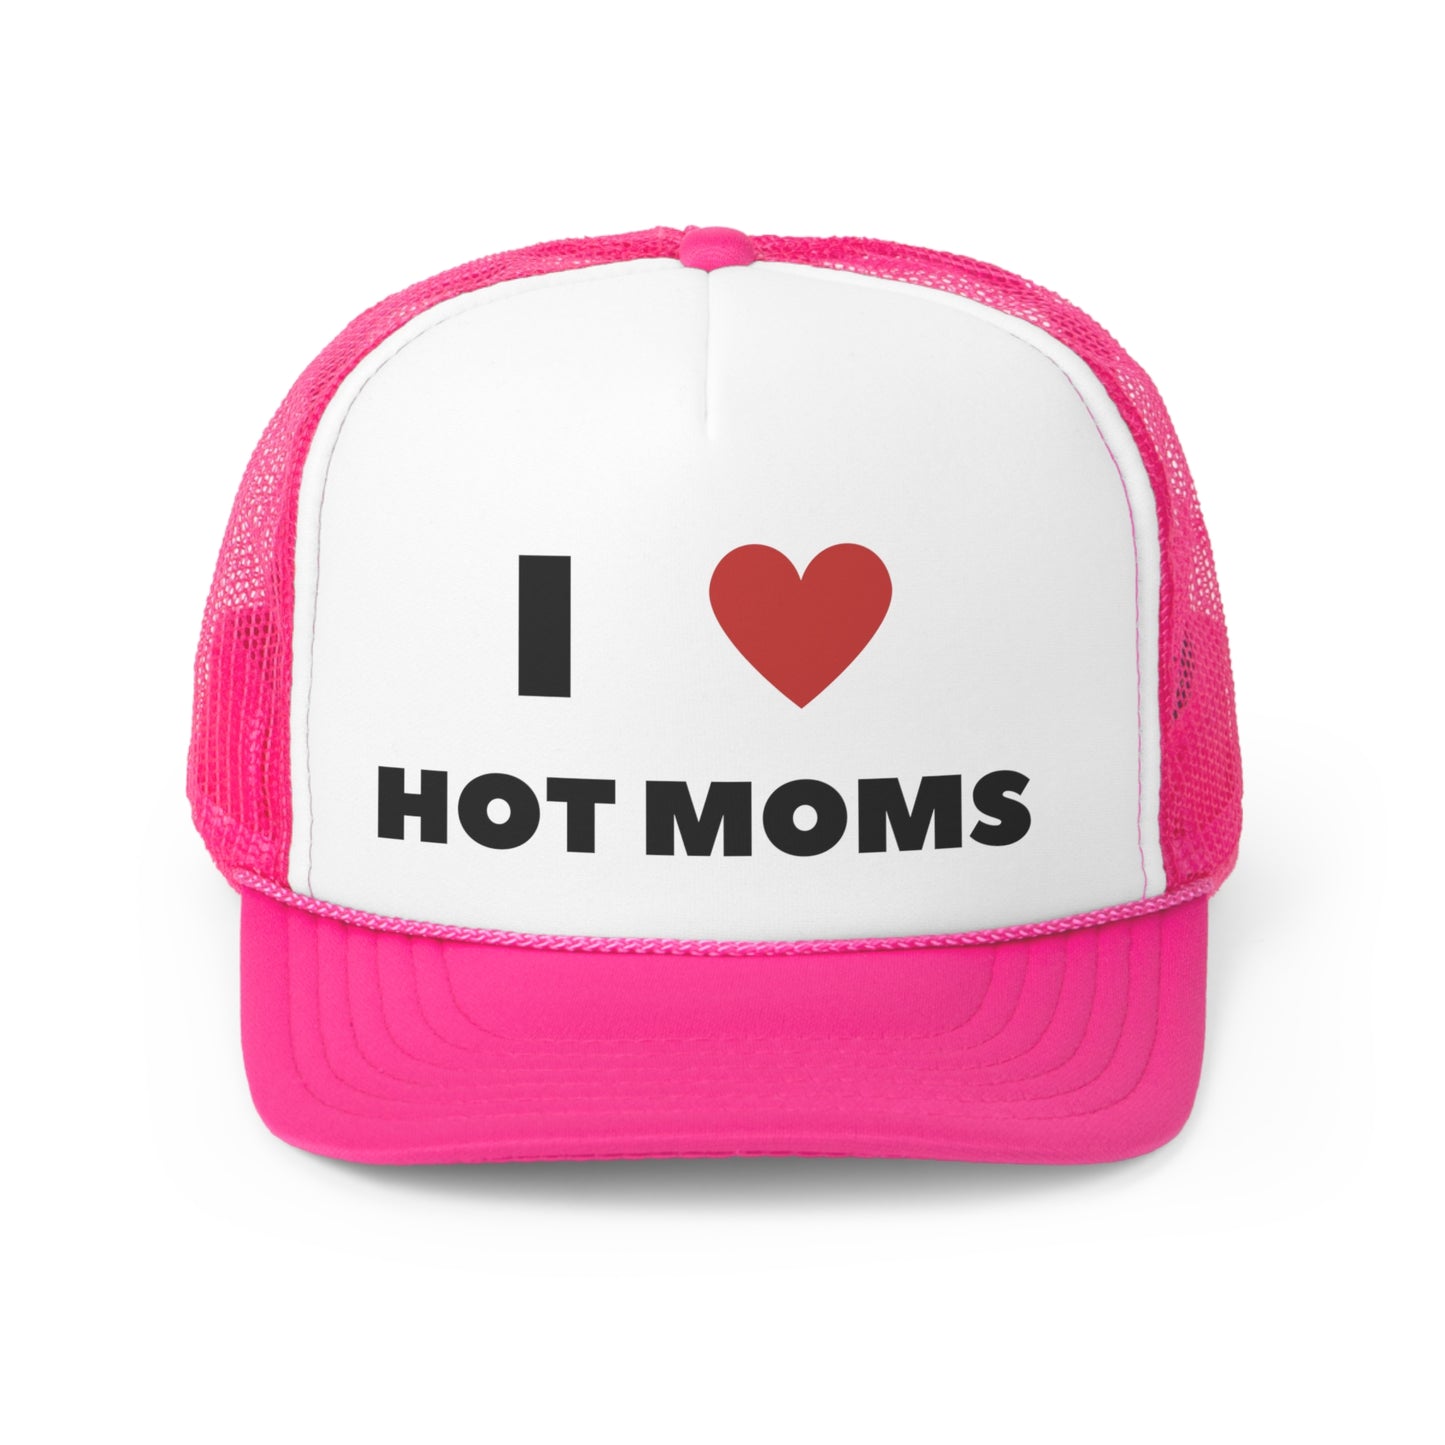 I love hot moms Trucker Cap